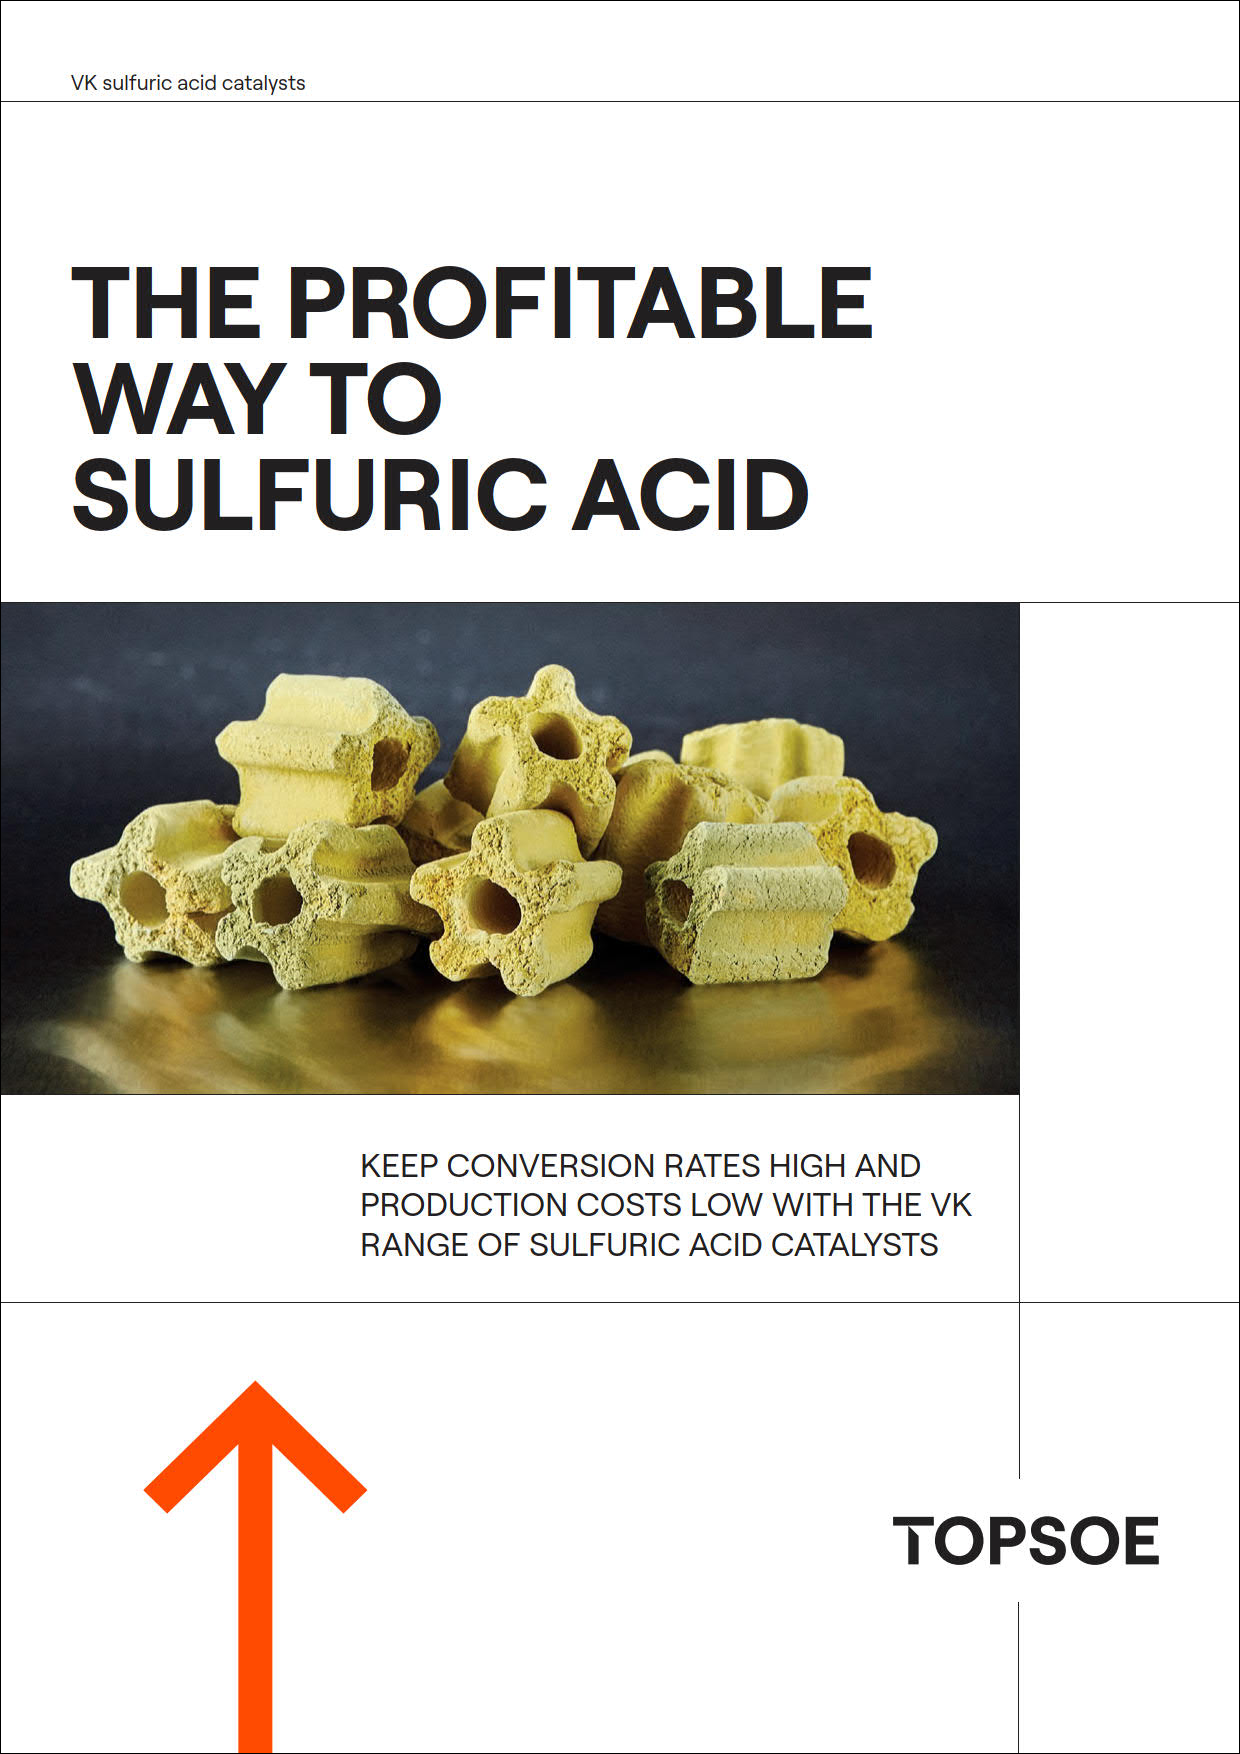 The profitable way to sulfuric acid